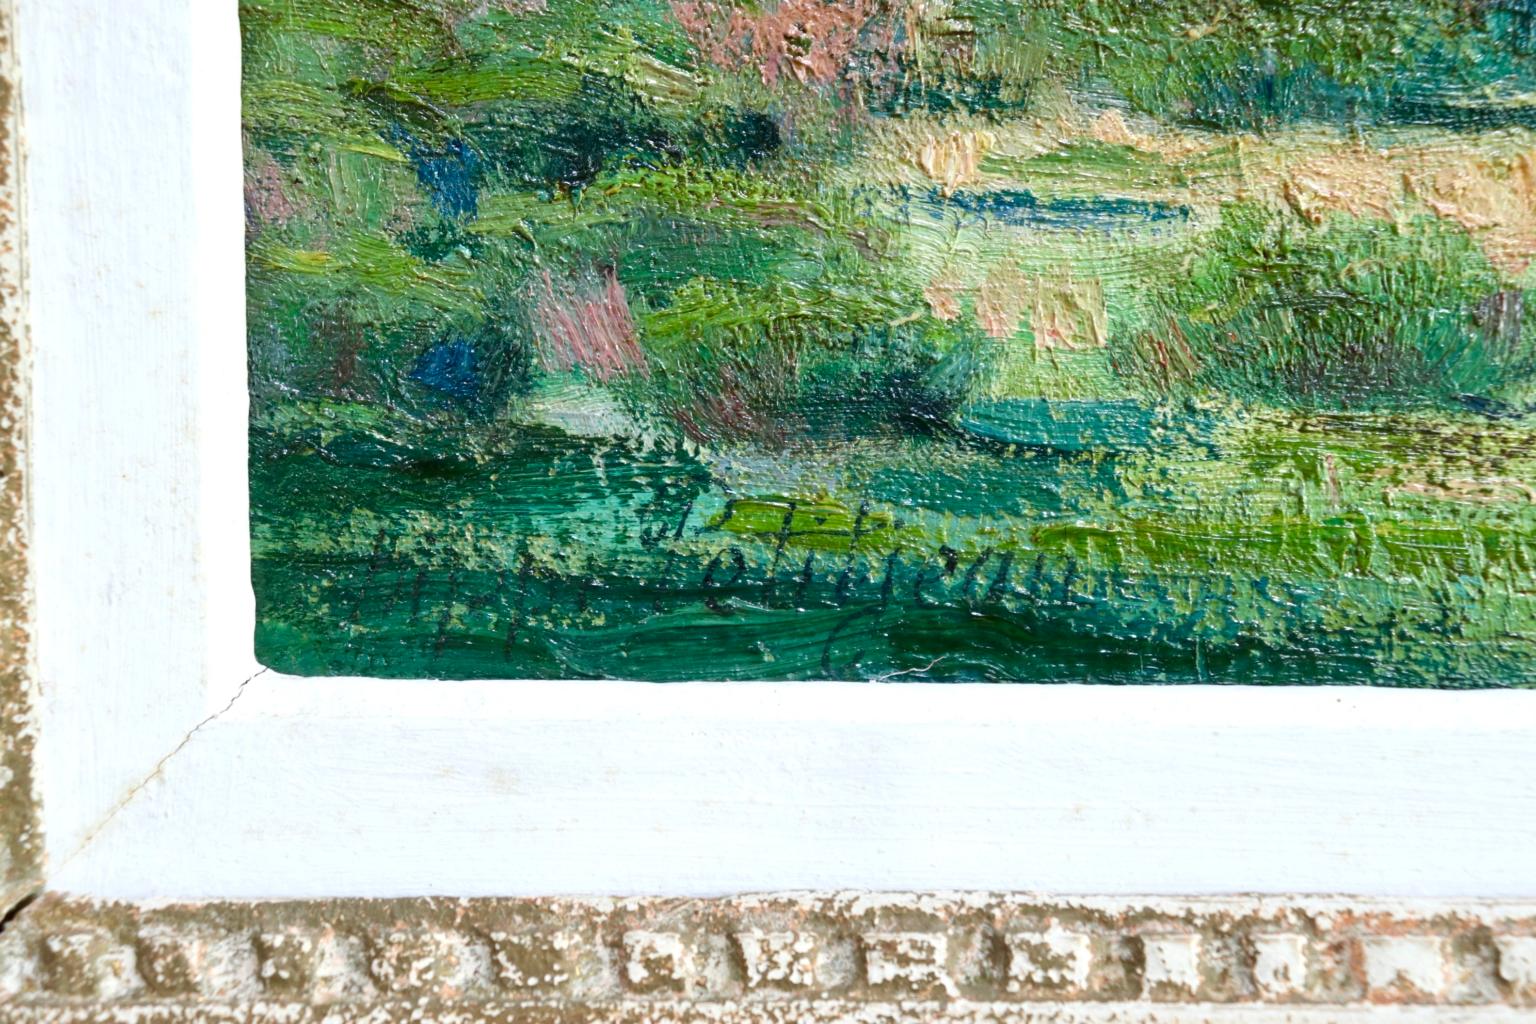 Donzy-le-Perthuis - Burgundy - Post Impressionist Oil, Landscape - H Petitjean - Gray Landscape Painting by Hippolyte Petitjean